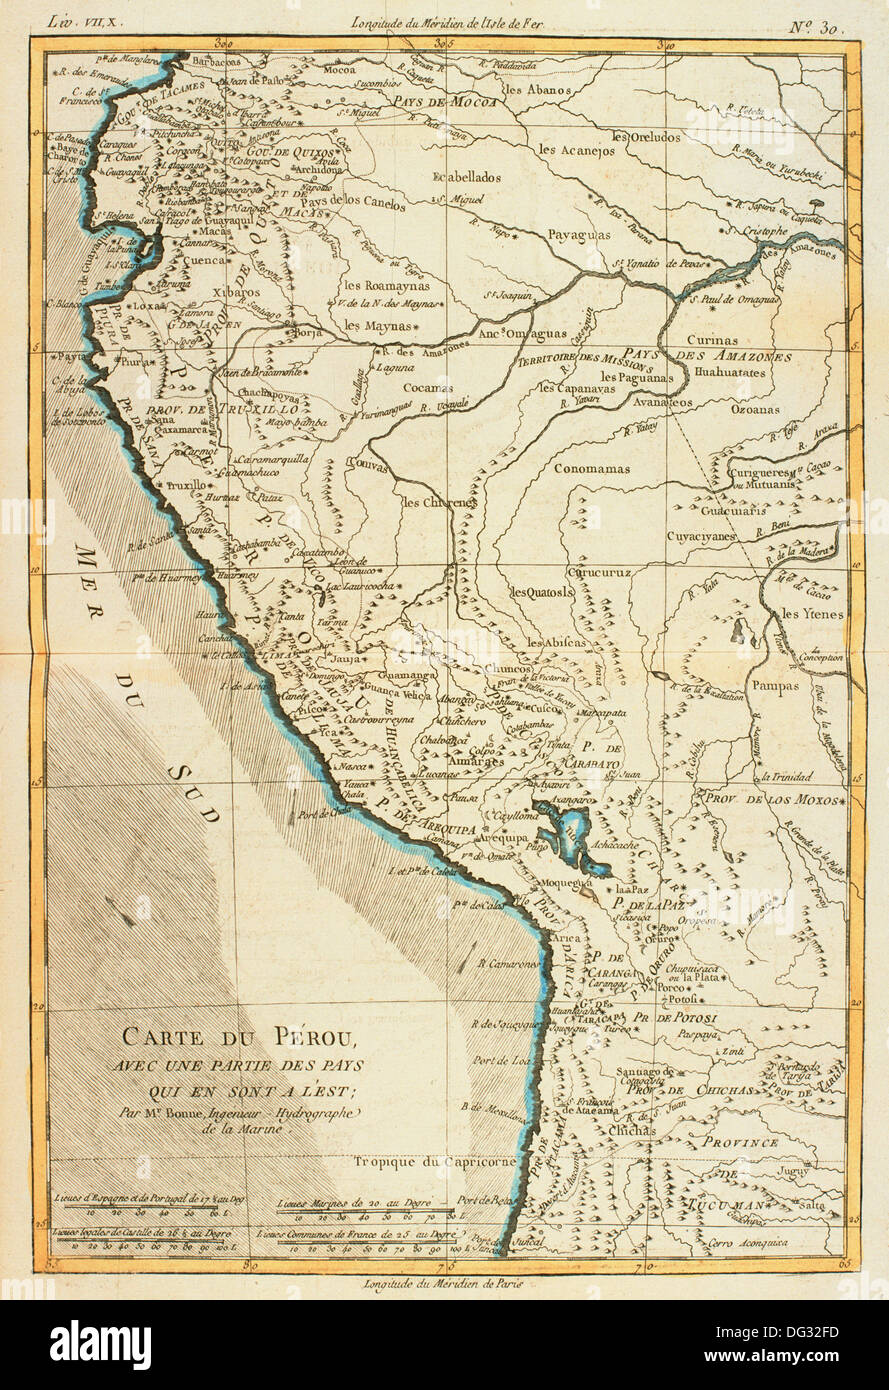 Peru, 18th century map Stock Photo